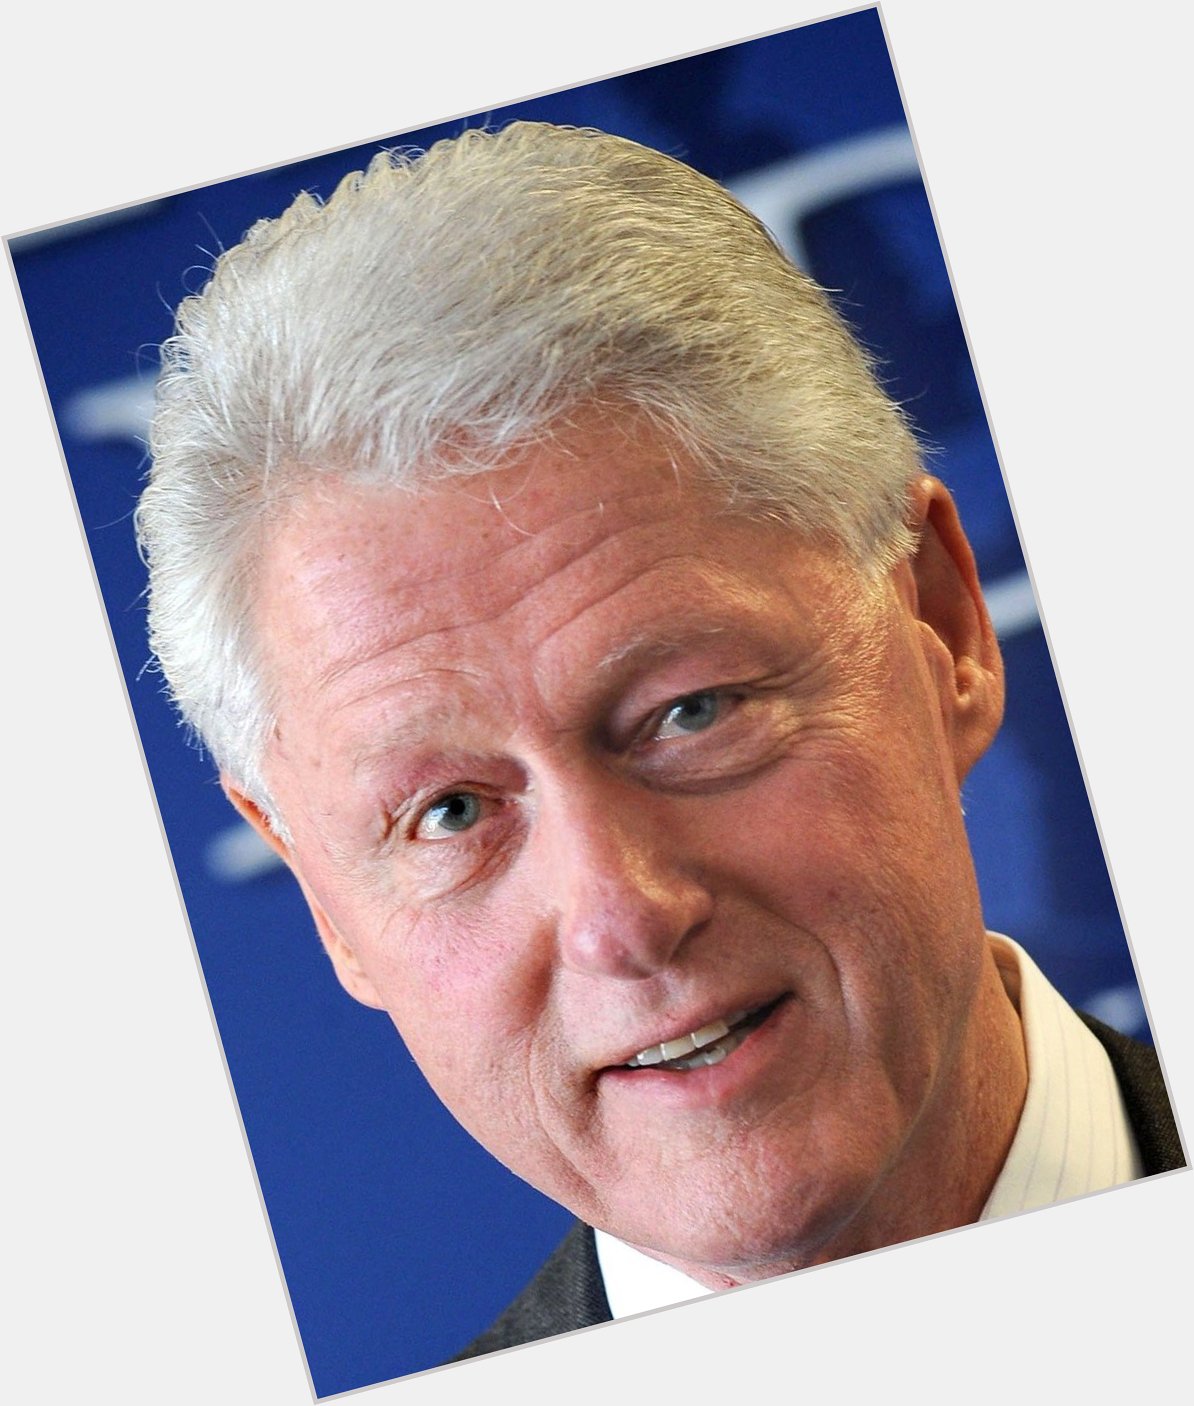 Bill Clinton GRATULIERE ZU DEINEM GEBURTSTAG.
URIME DITELINDJE Bill Clinton
happy birthday Bill Clinton. 